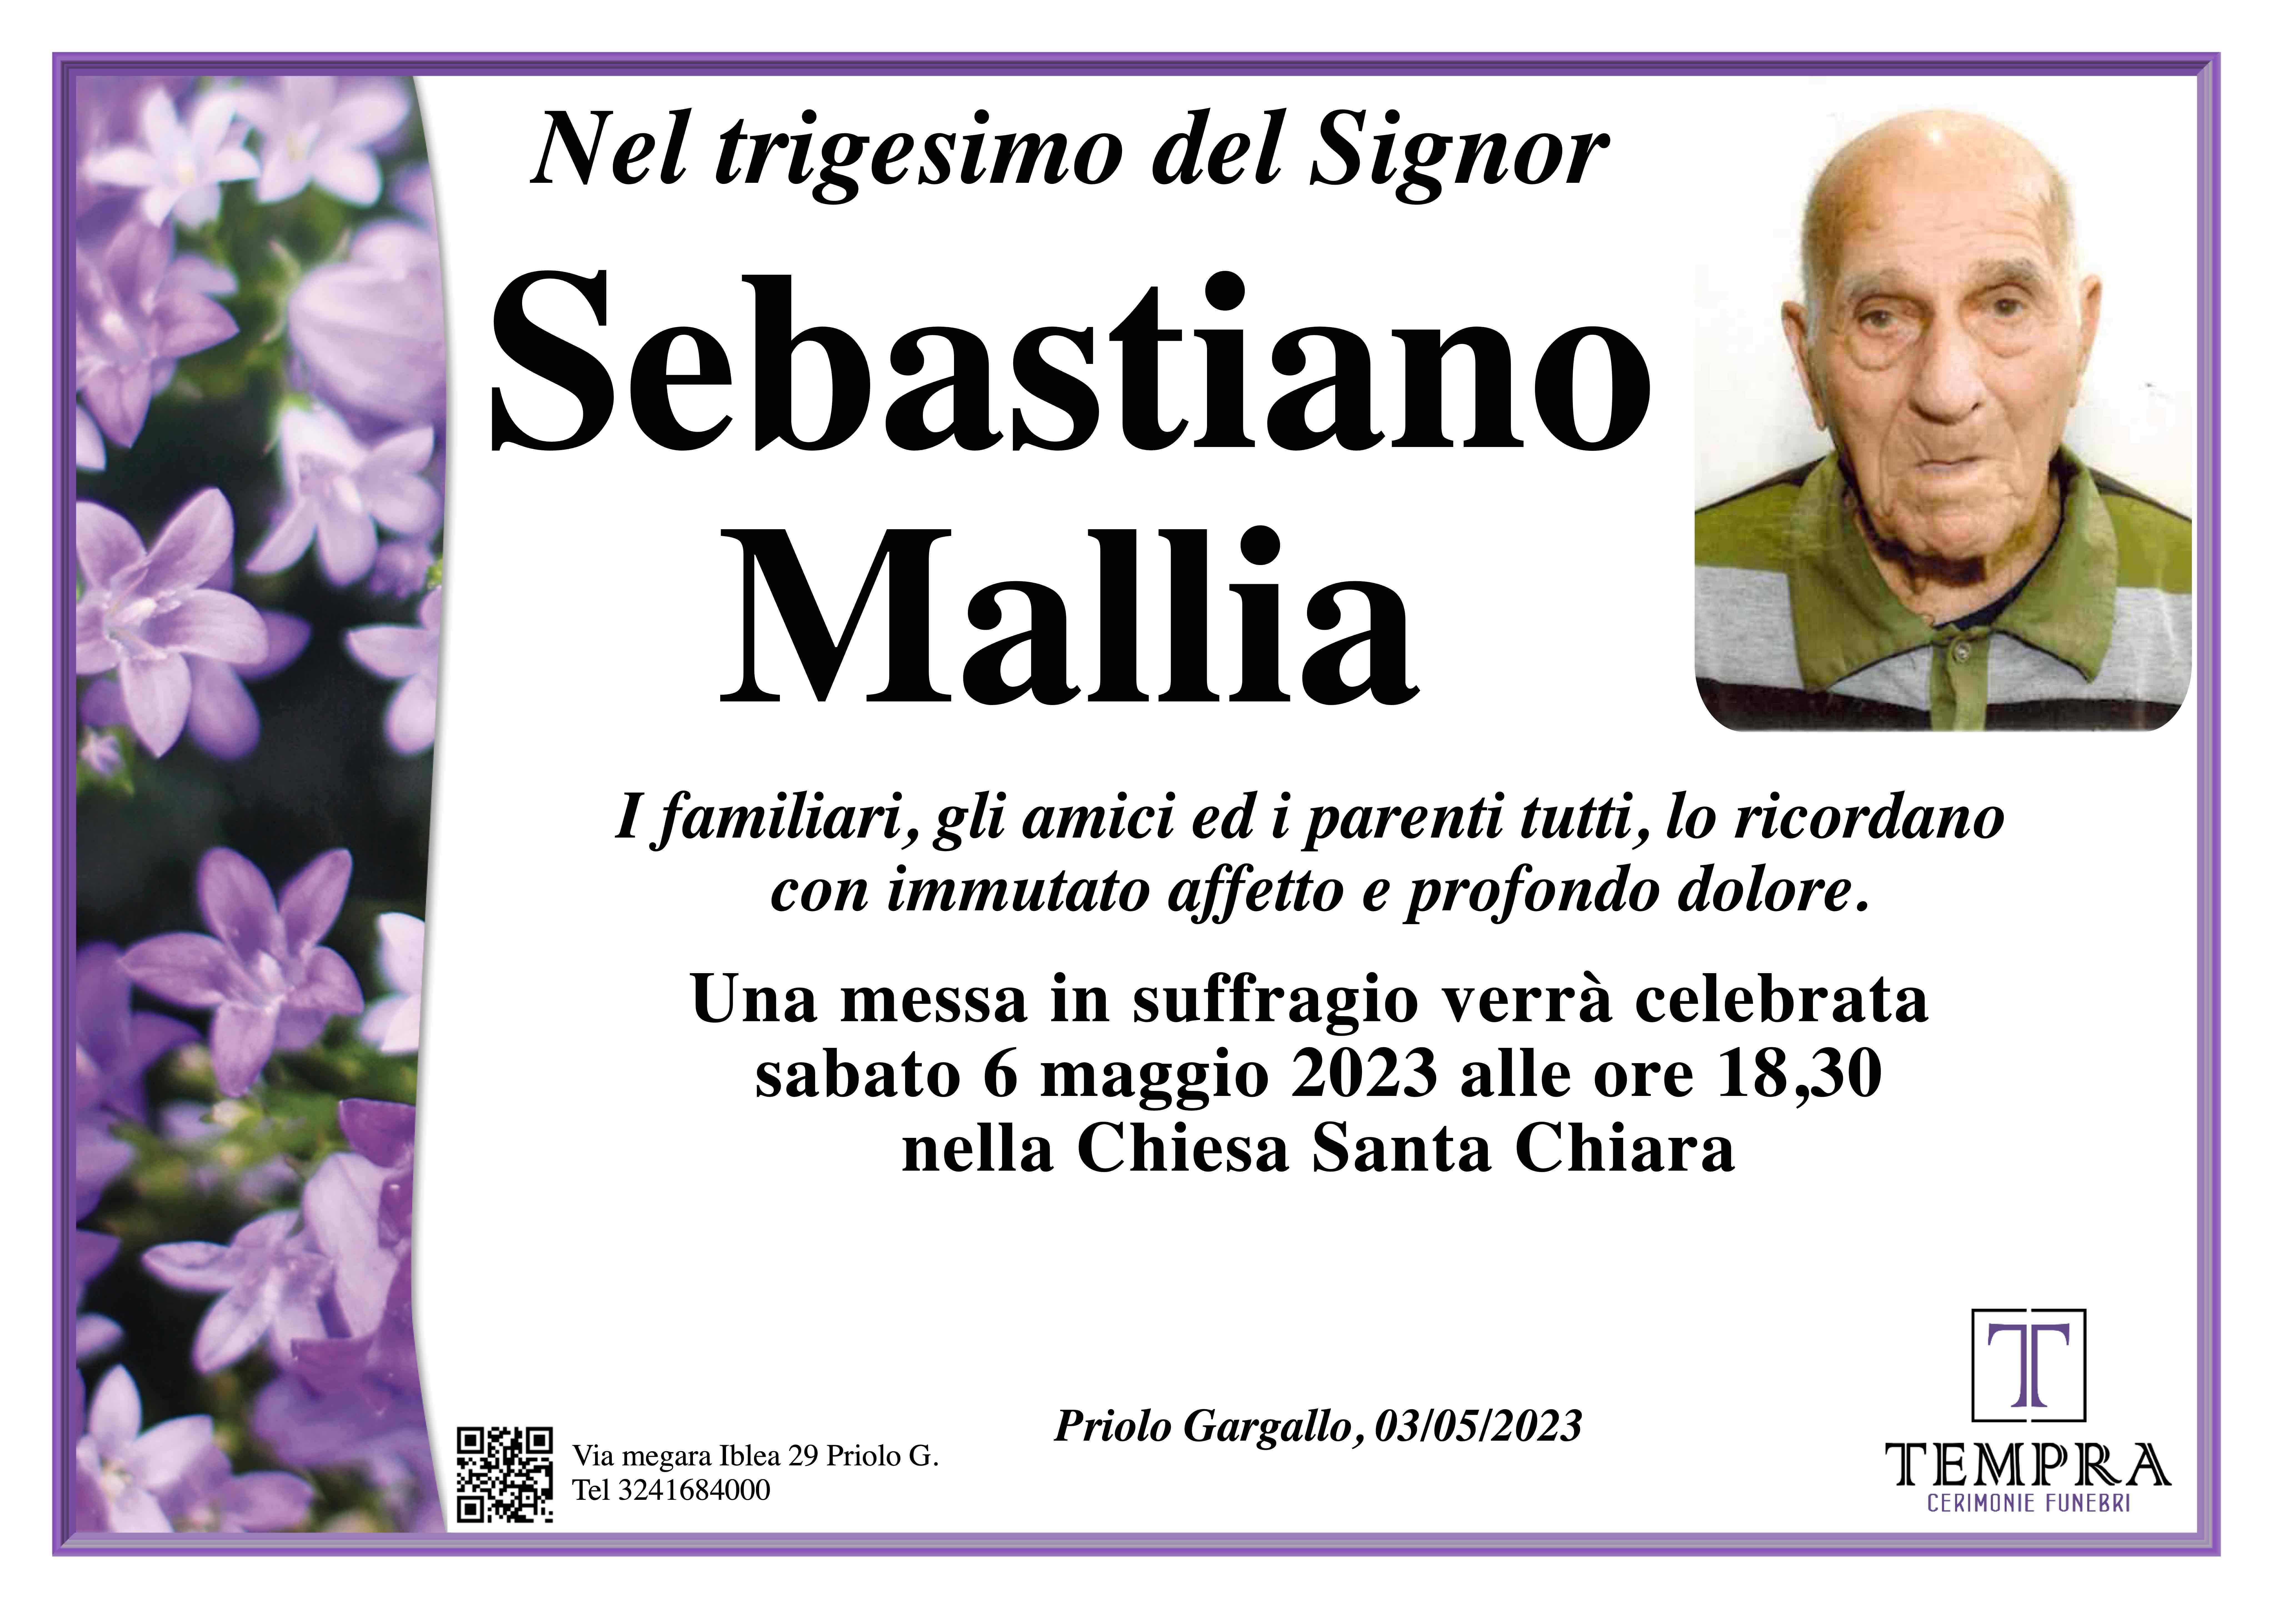 Sebastiano Mallia